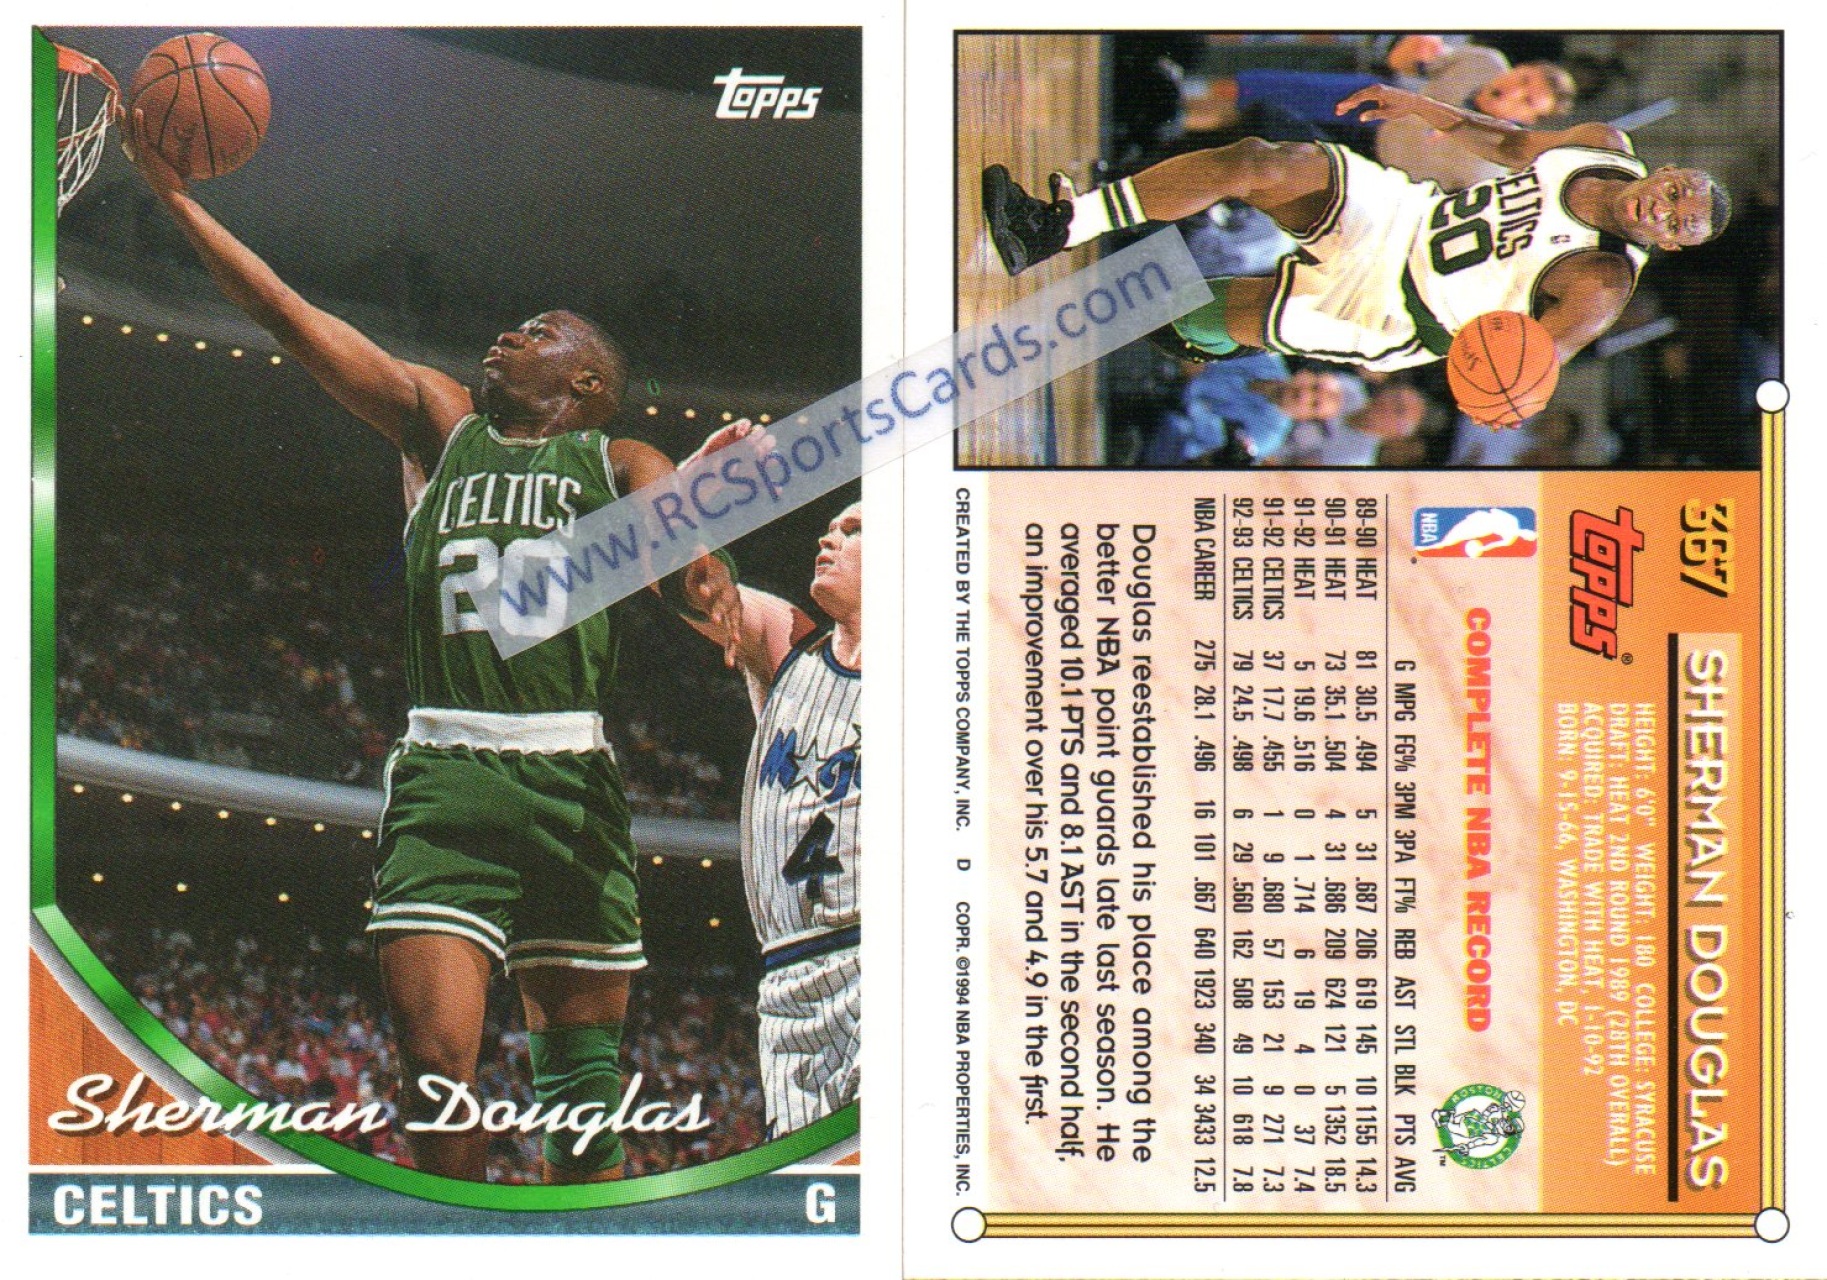 1992 Upper Deck NBA Basketball Card #123 Reggie Lewis, Celtics (I7)